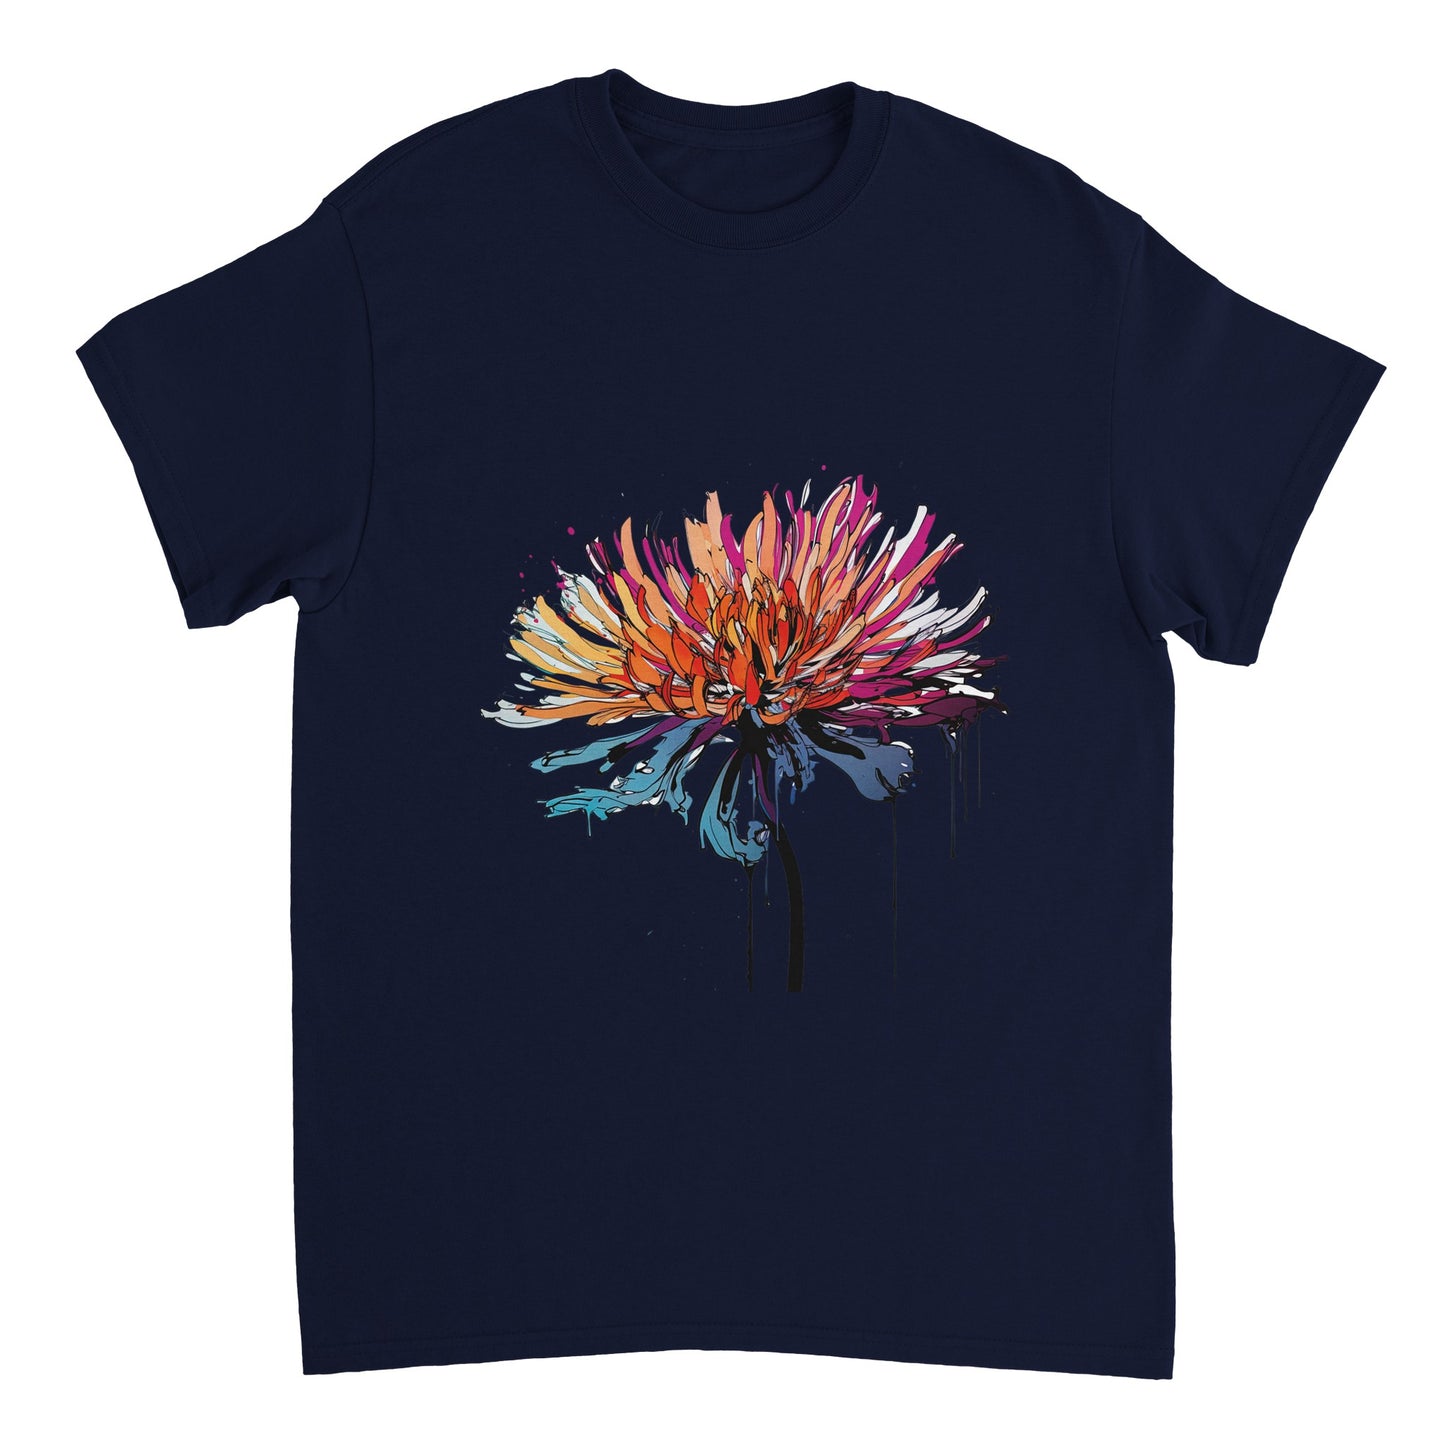 Chrysanthemum - Flower Power collection - Unisex Crewneck T-shirt